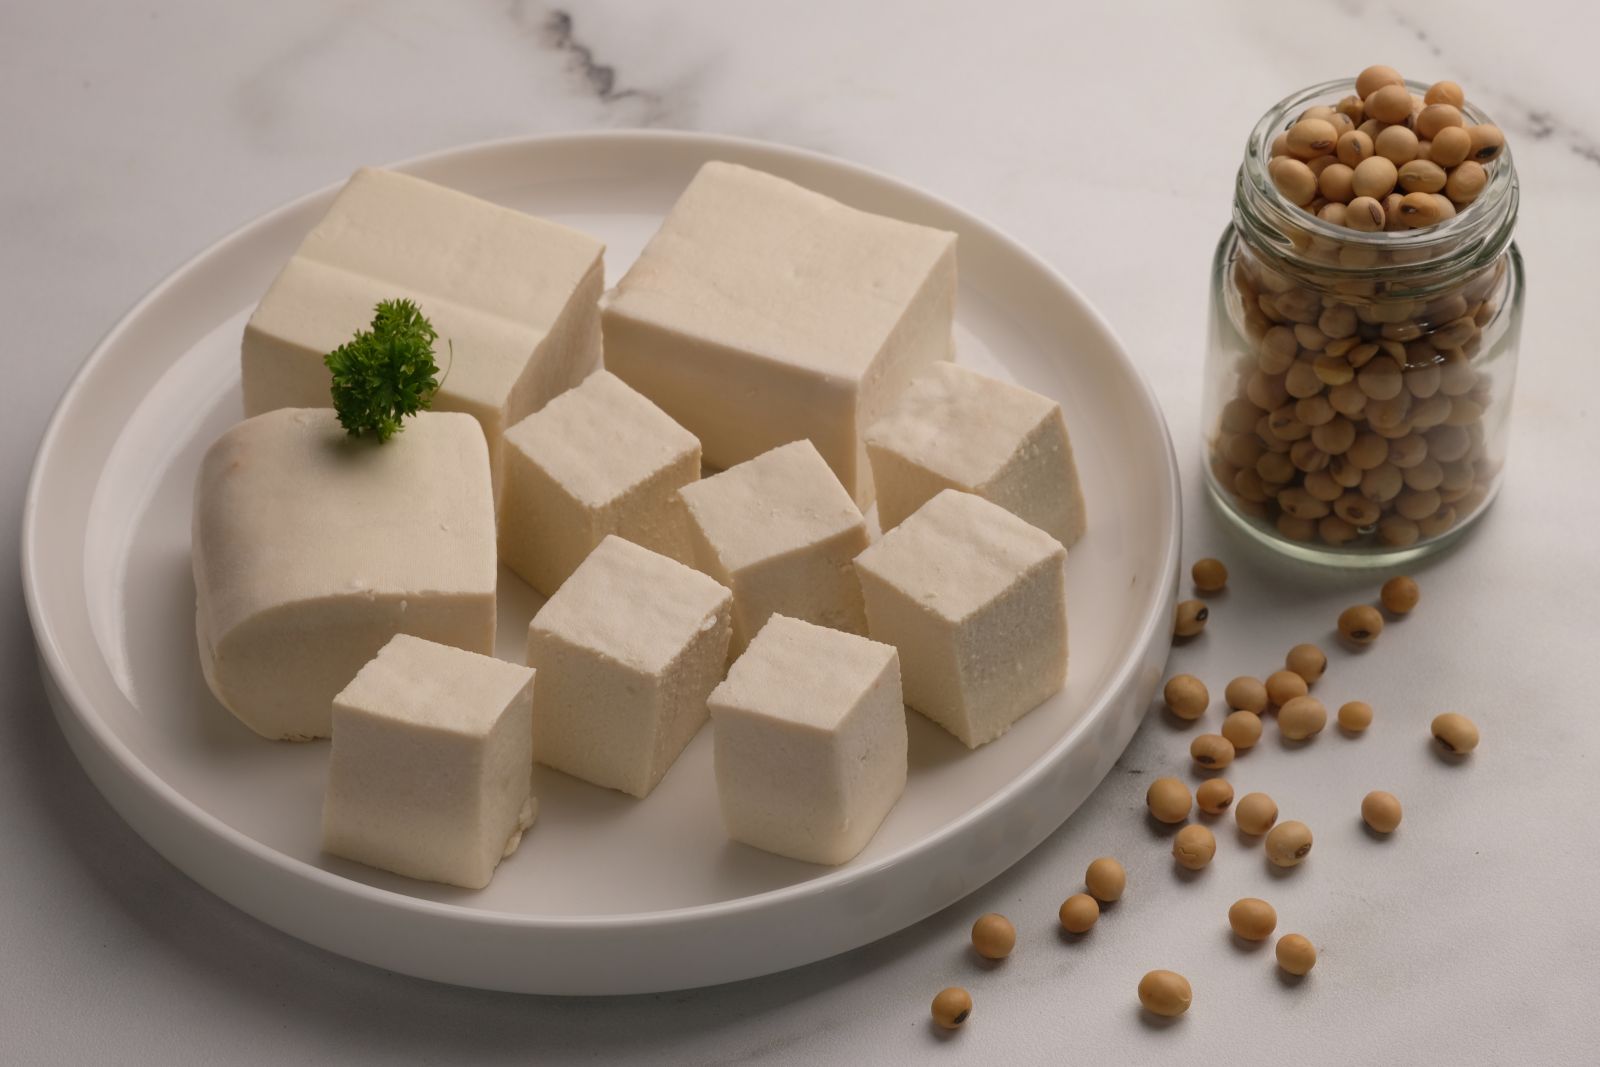 Tofu and soybeans by Ika Rakhmawati Hilal via iStock